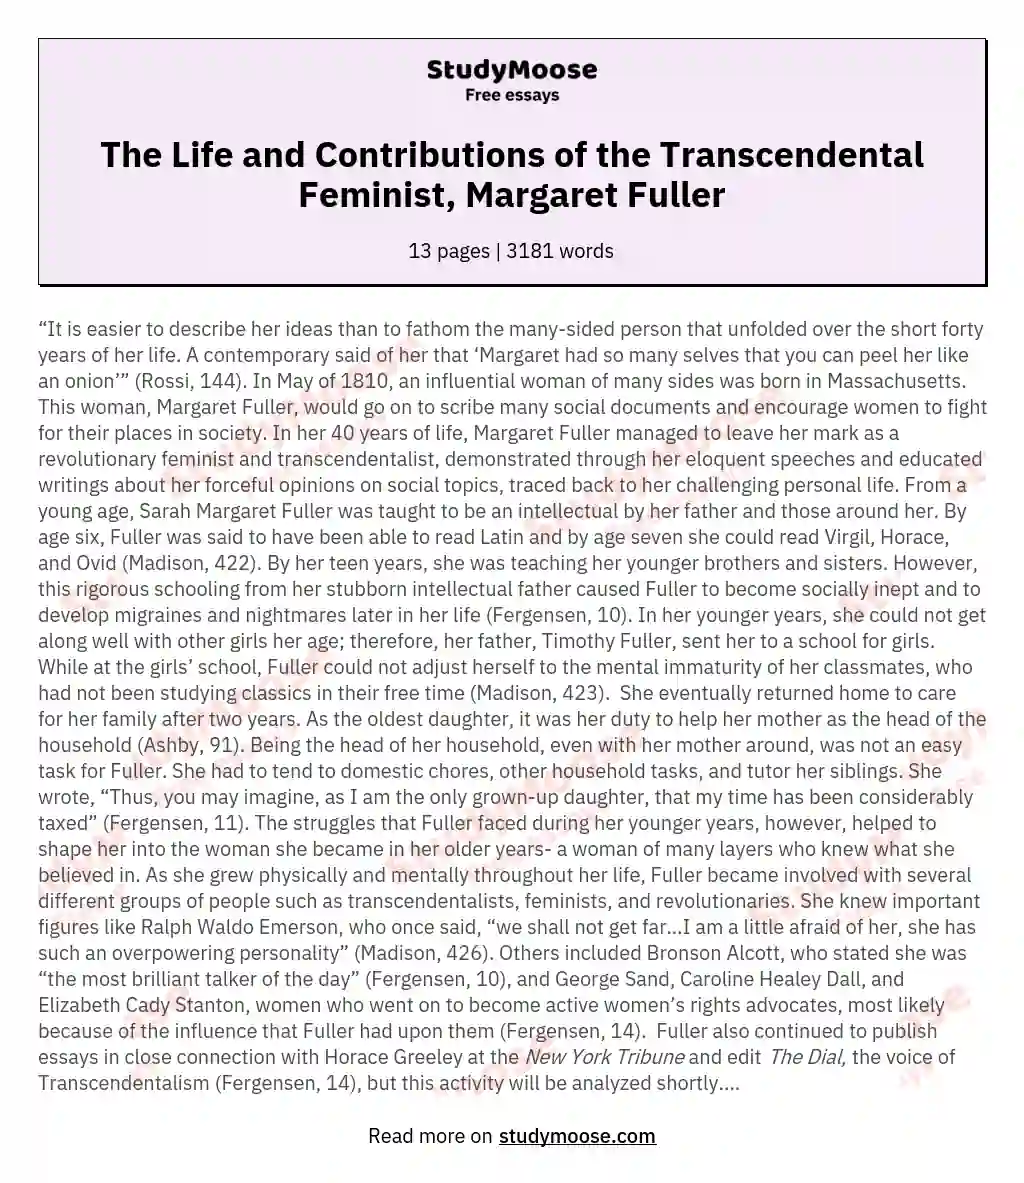 The Life and Contributions of the Transcendental Feminist, Margaret Fuller essay